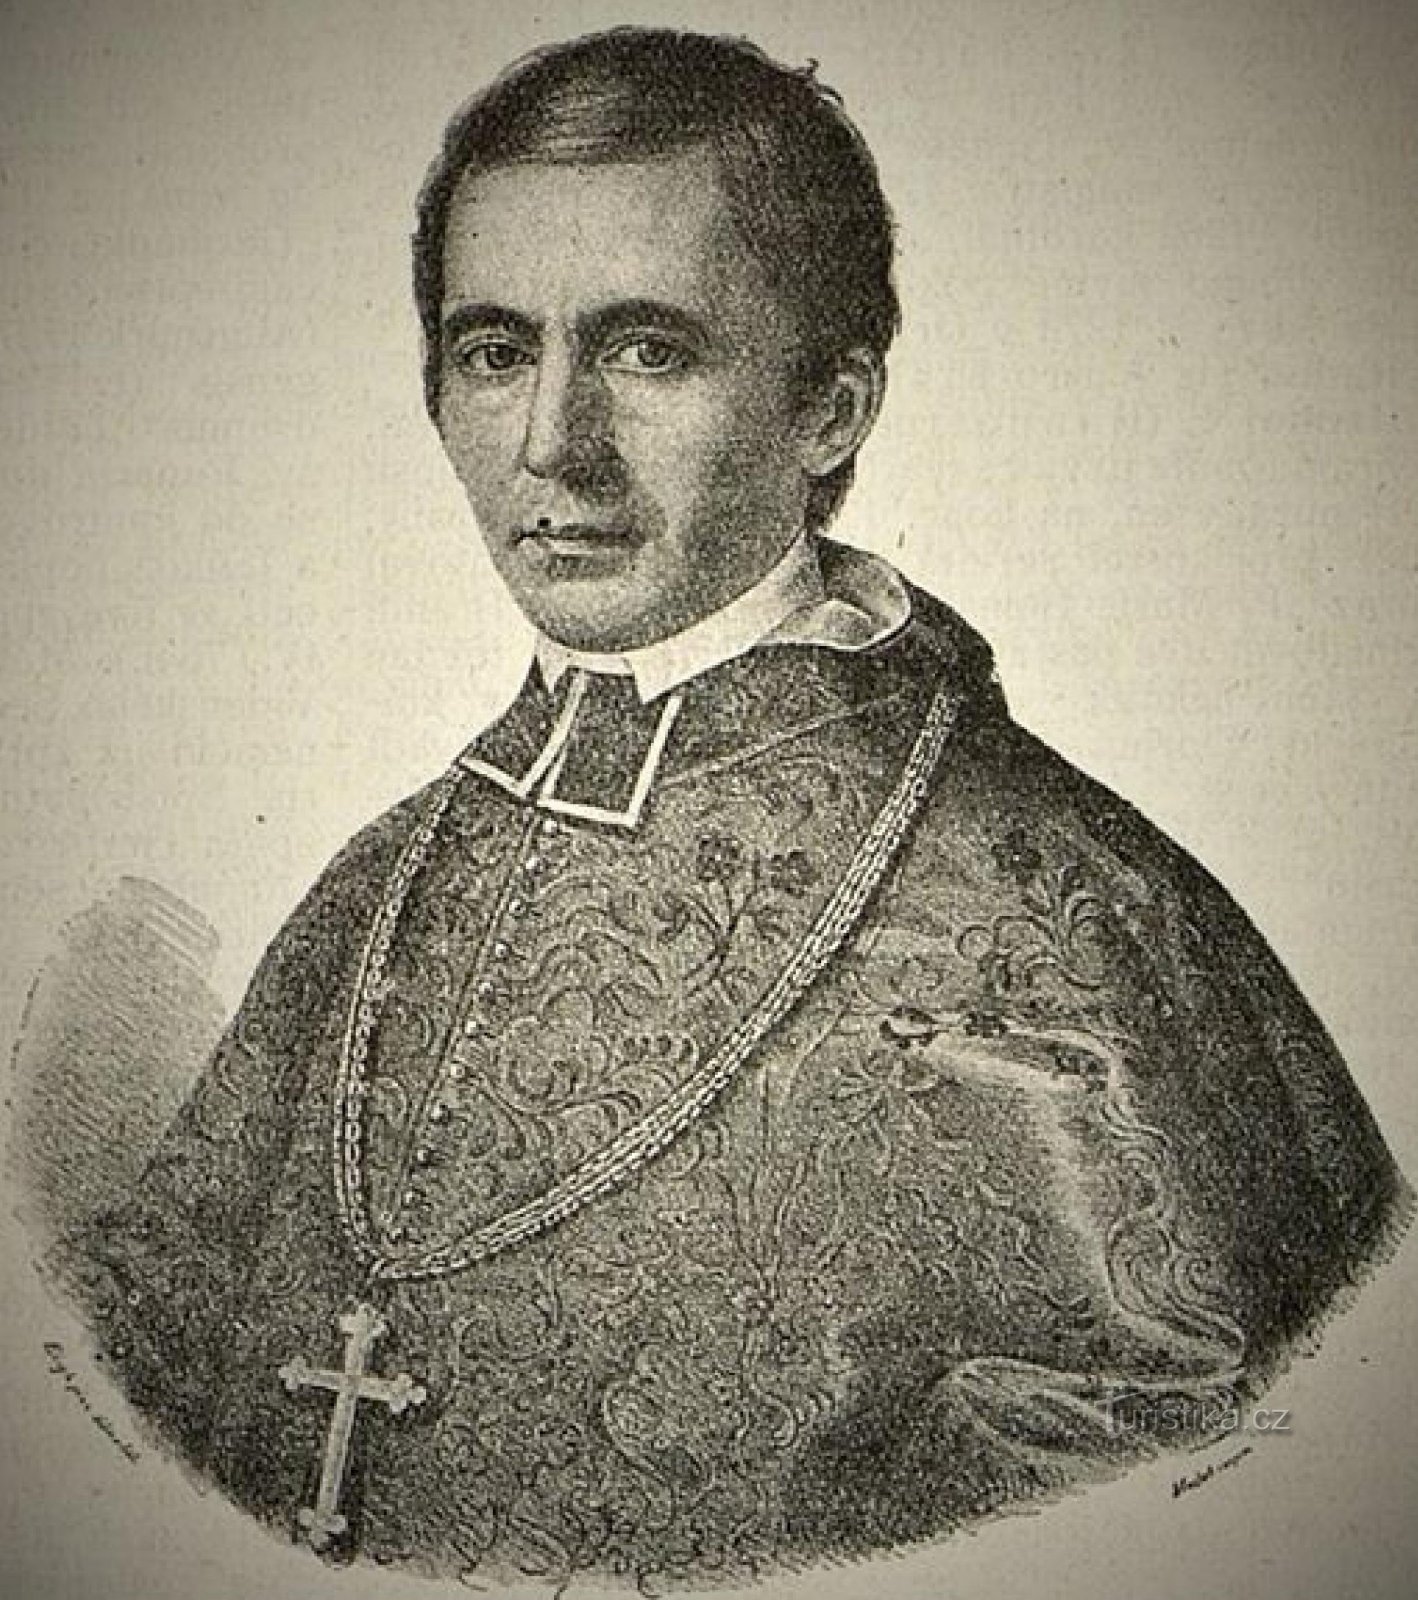 Hradec Králové Επίσκοπος κ.κ. Ph.Dr. Karel B. Hanl